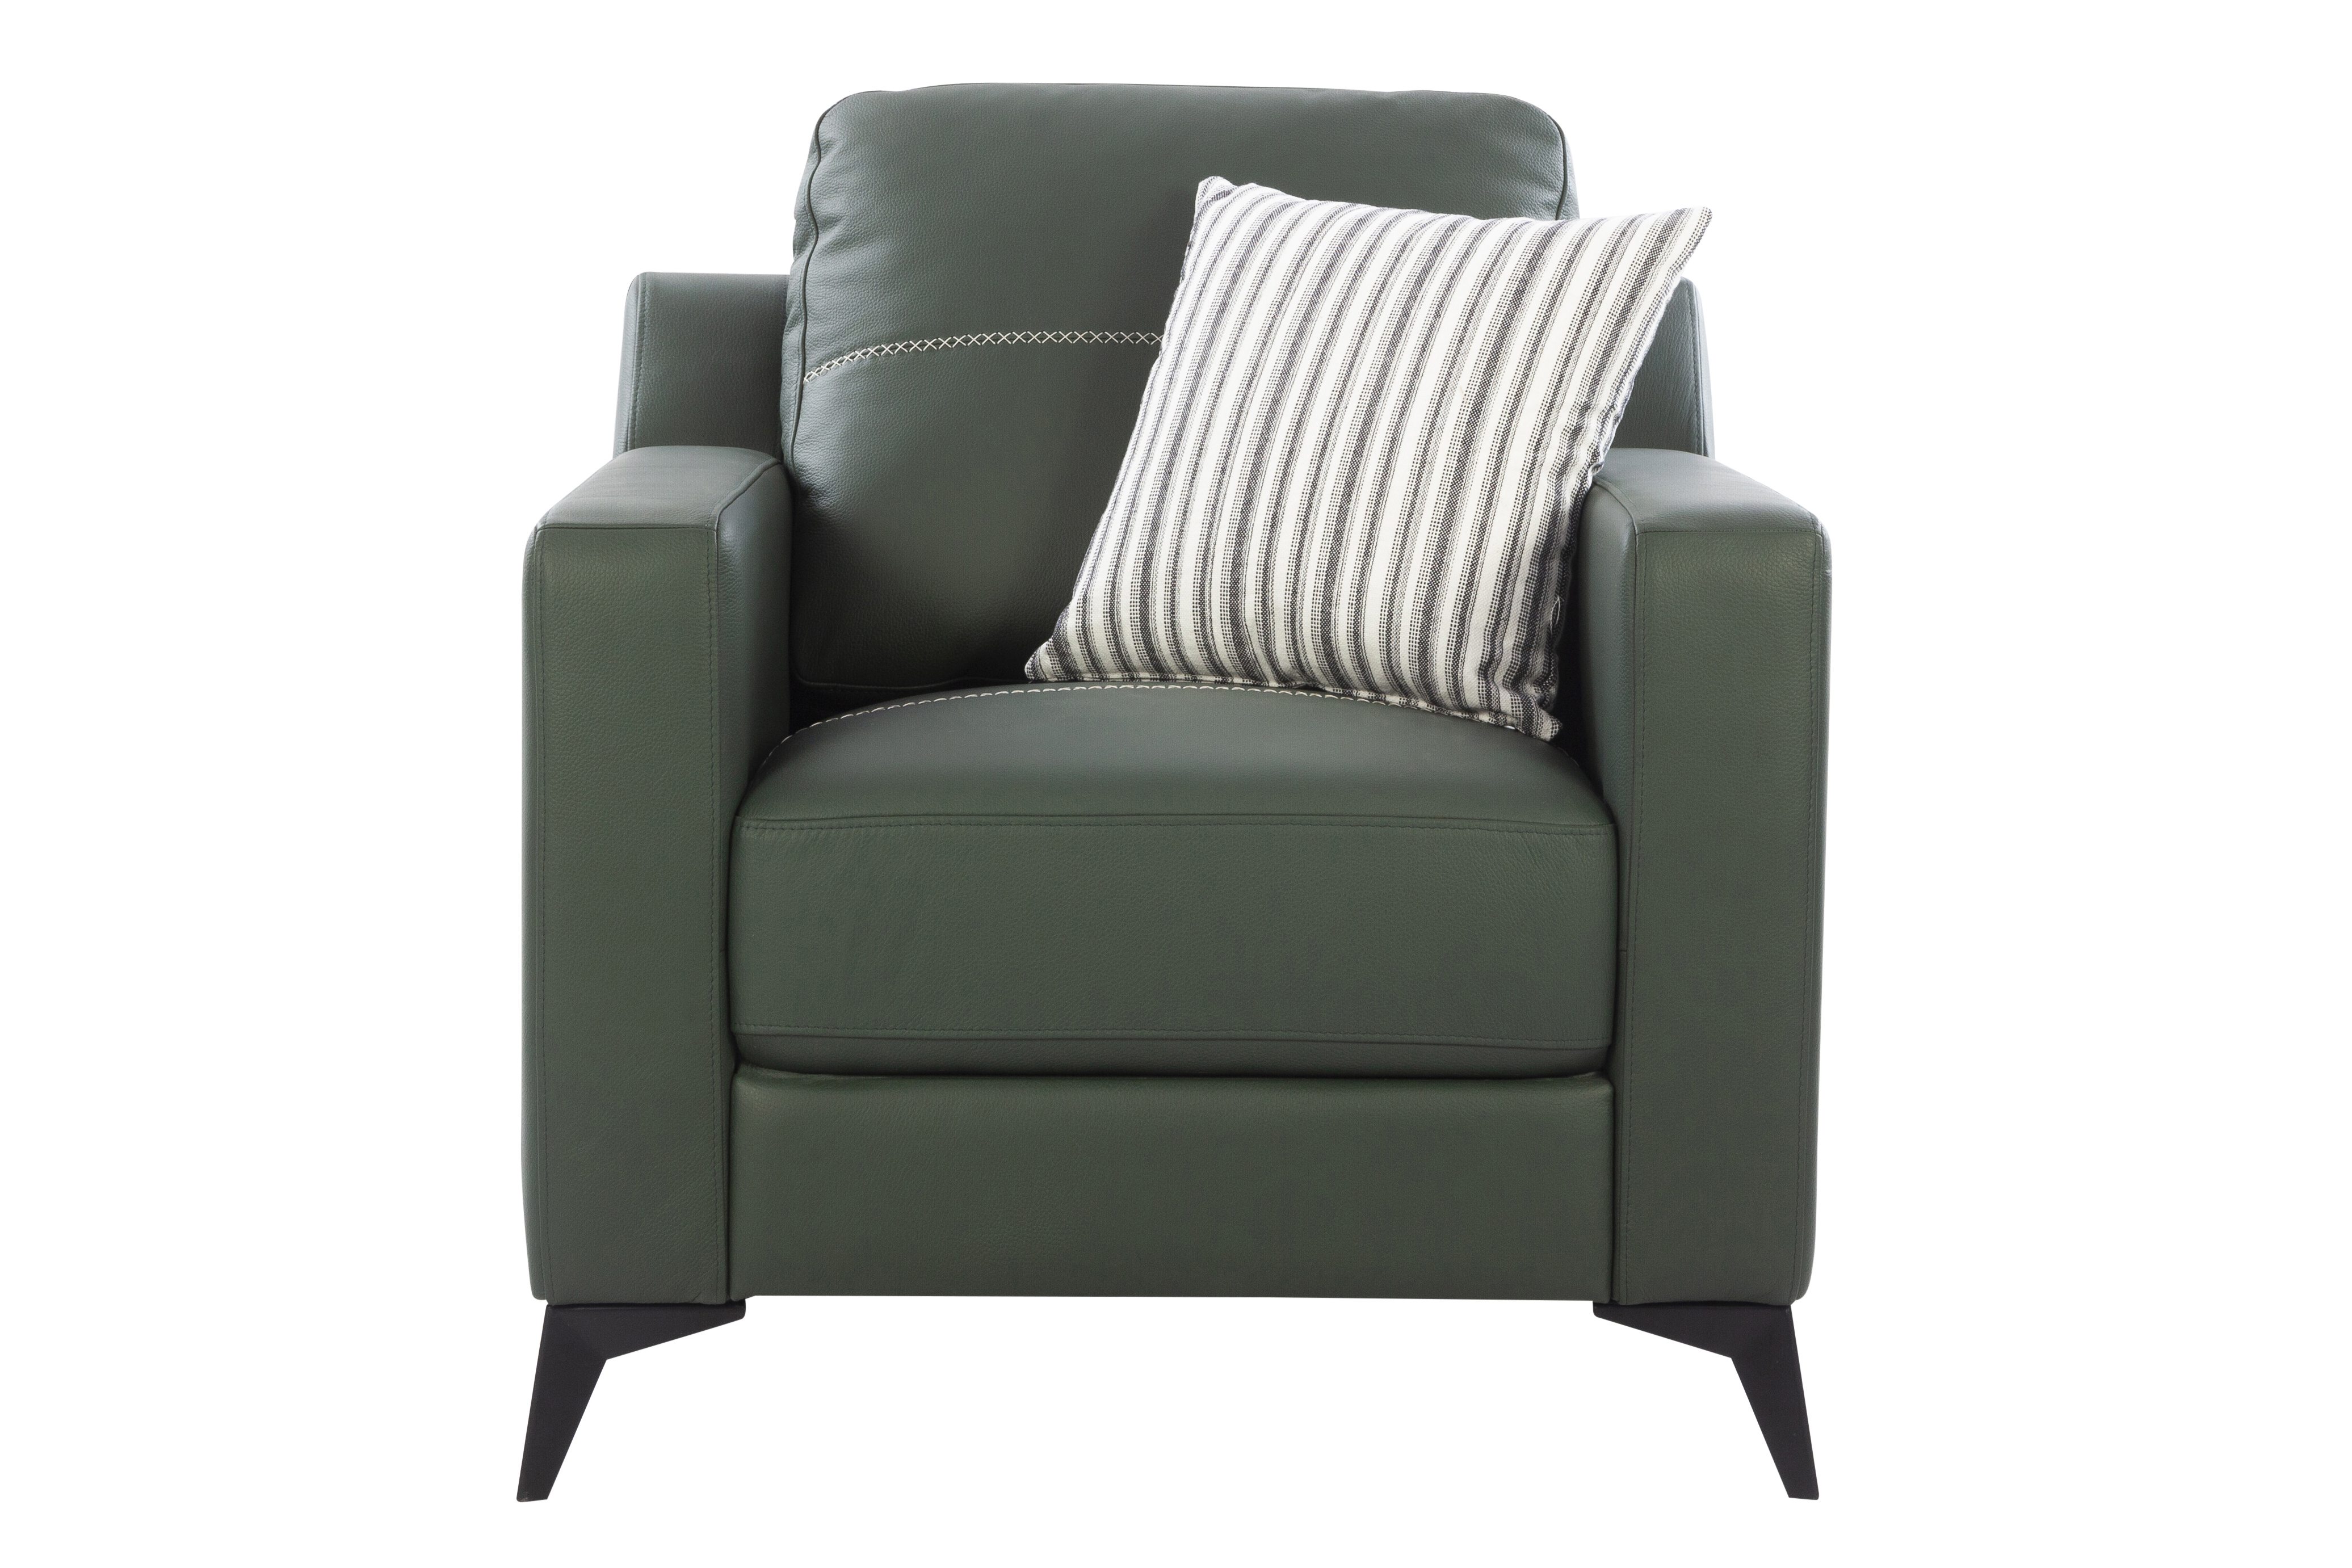 Tucson Leather sofa set